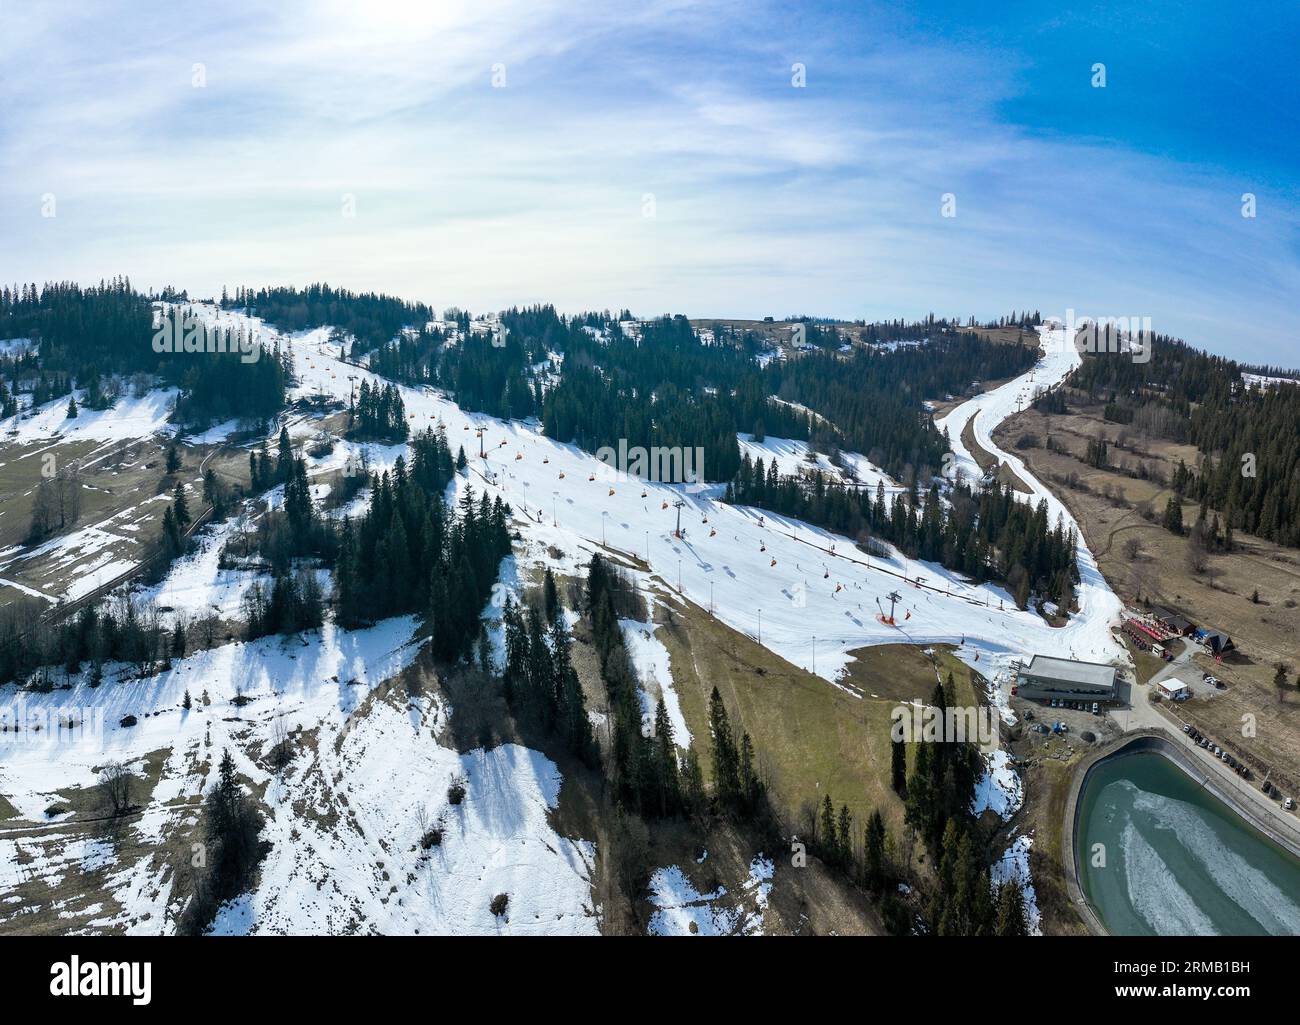 Ski slopes, chairlifts, skiers and snowboarders in Bialka Tatrzanska ski resort in Poland in winter. Aerial panorama Stock Photo